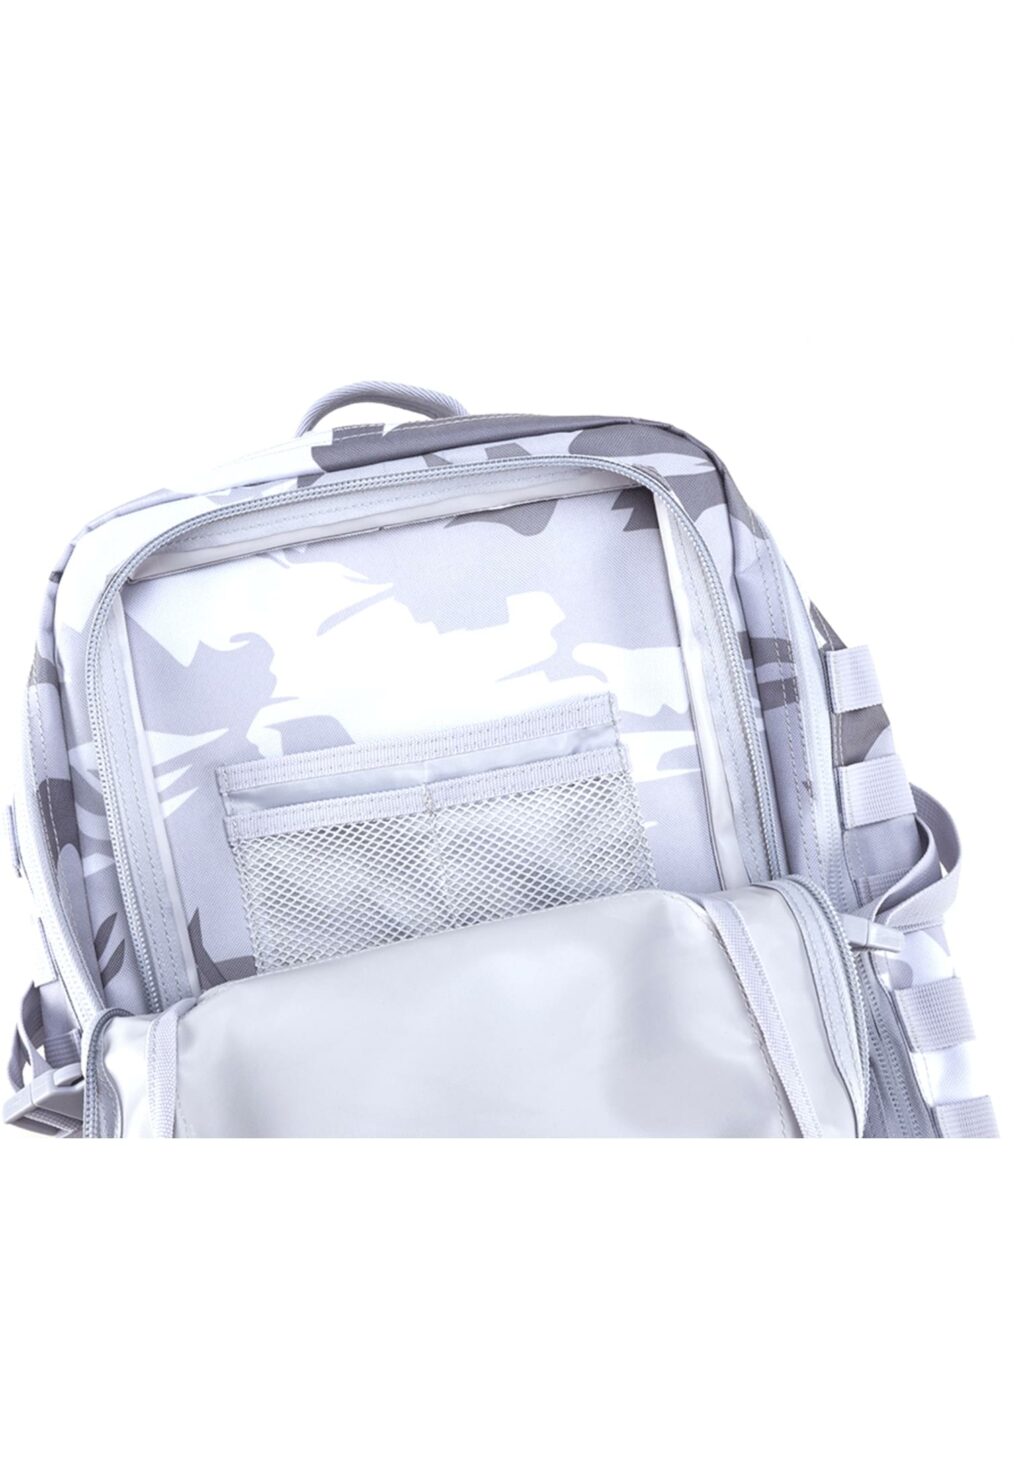 Brandit US Cooper Backpack Large blizzard camo one BD8008